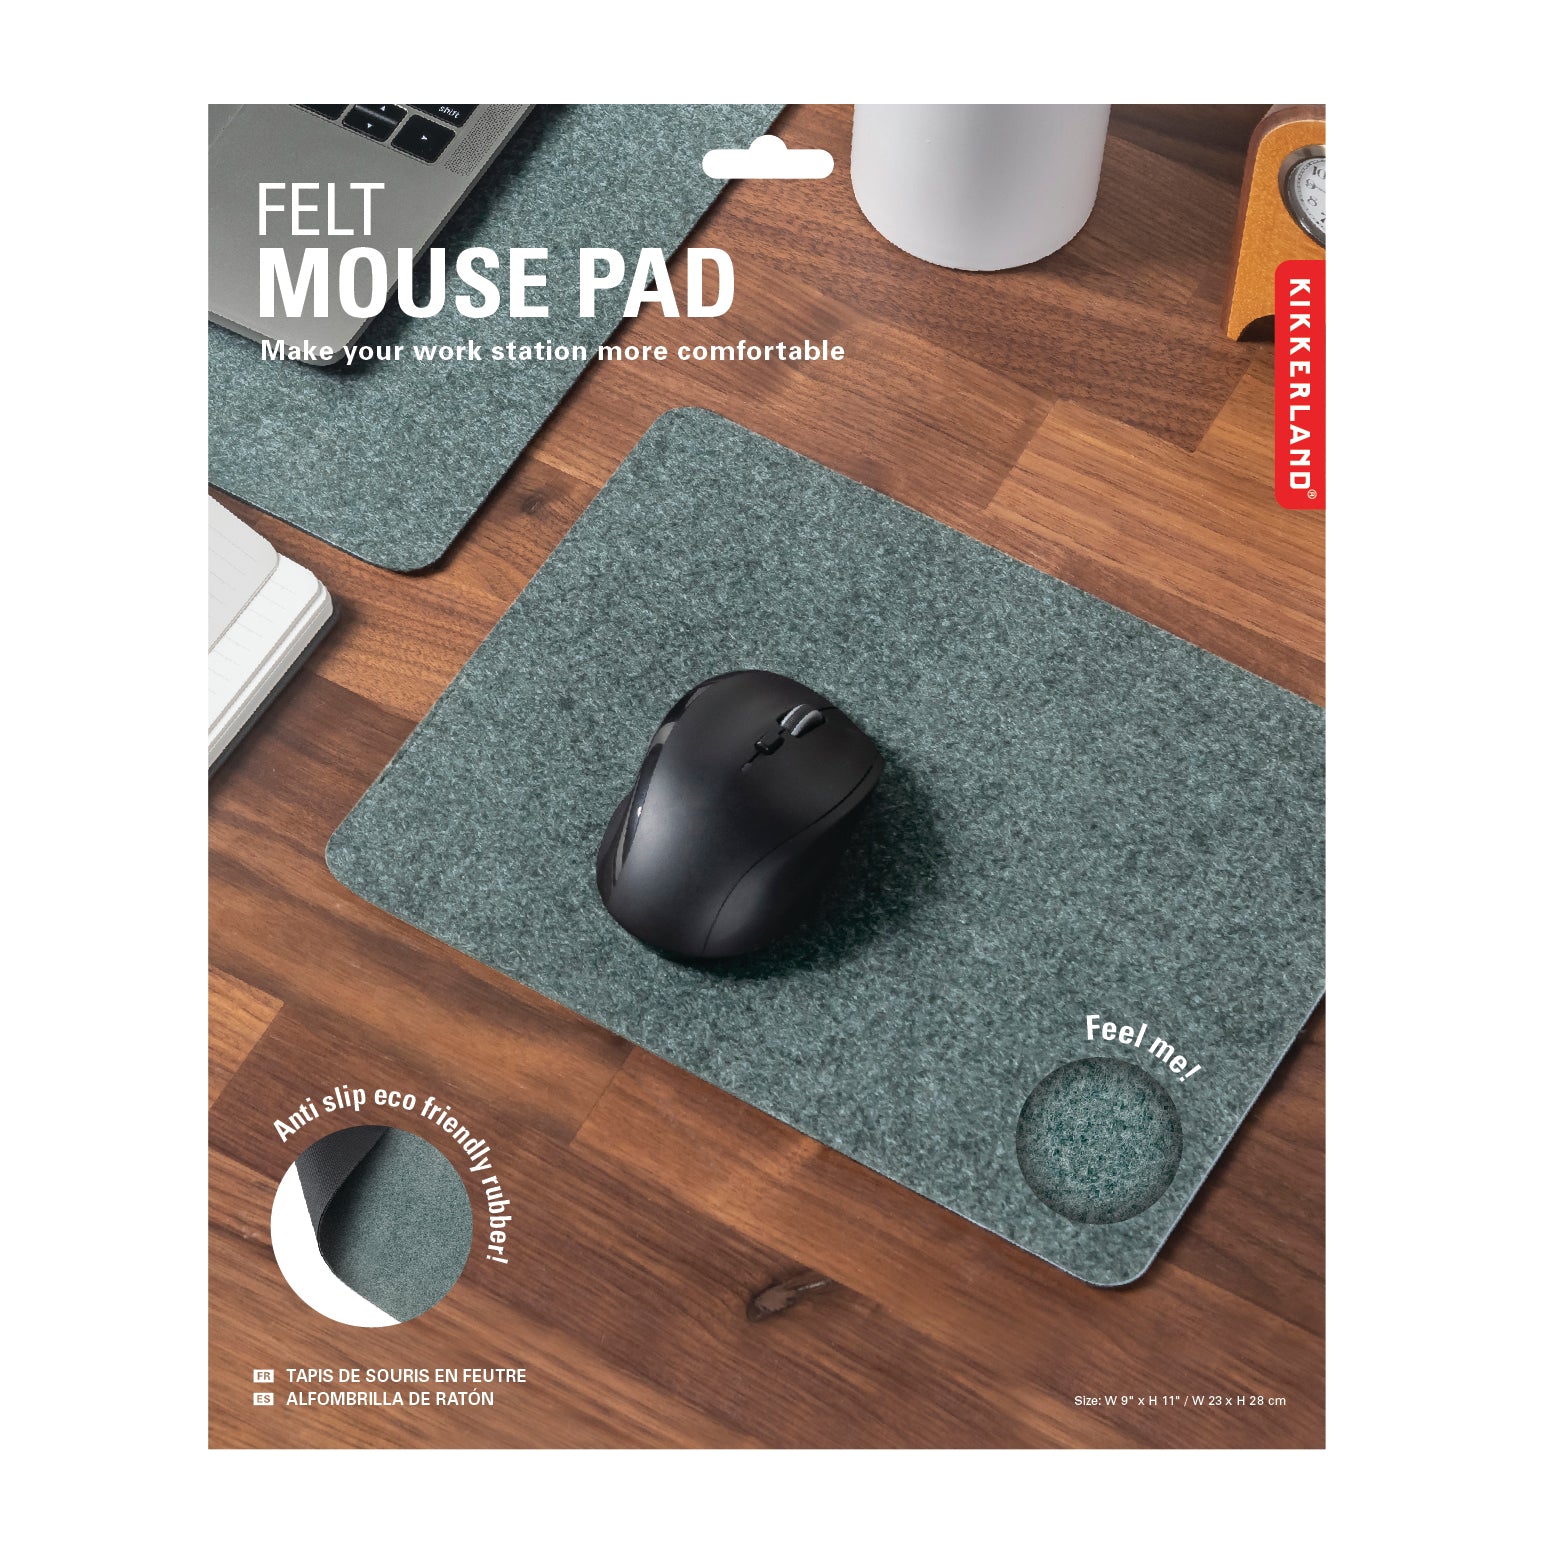 Tapis de souris canapé – Kikkerland Design Inc